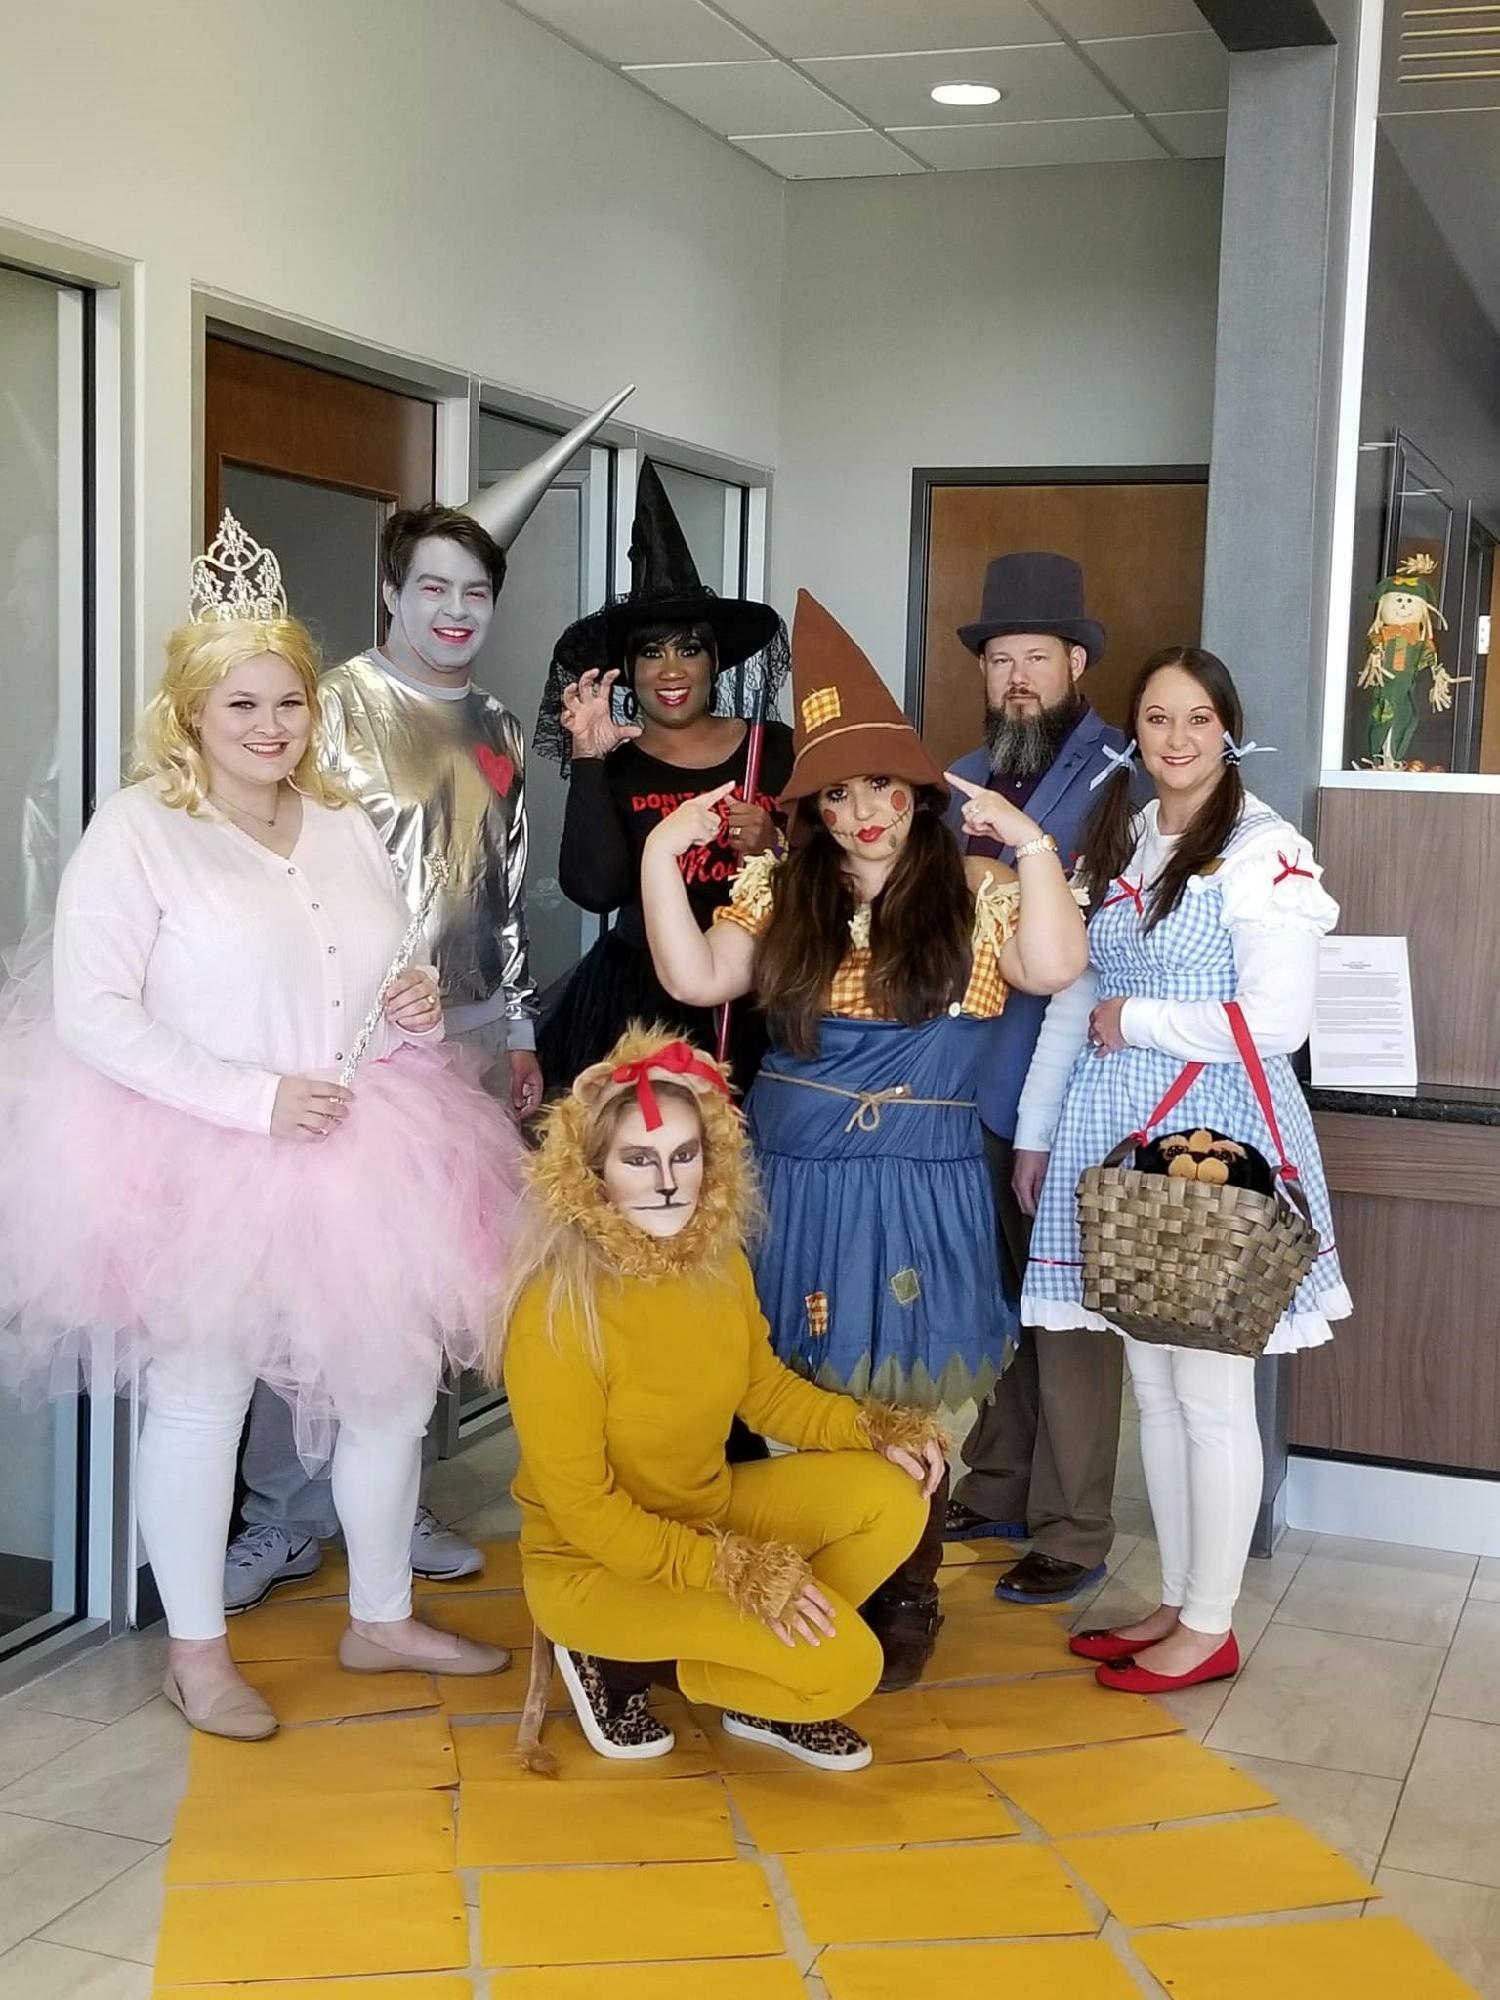 Employees enjoy some fun on Halloween where imaginations can run wild!